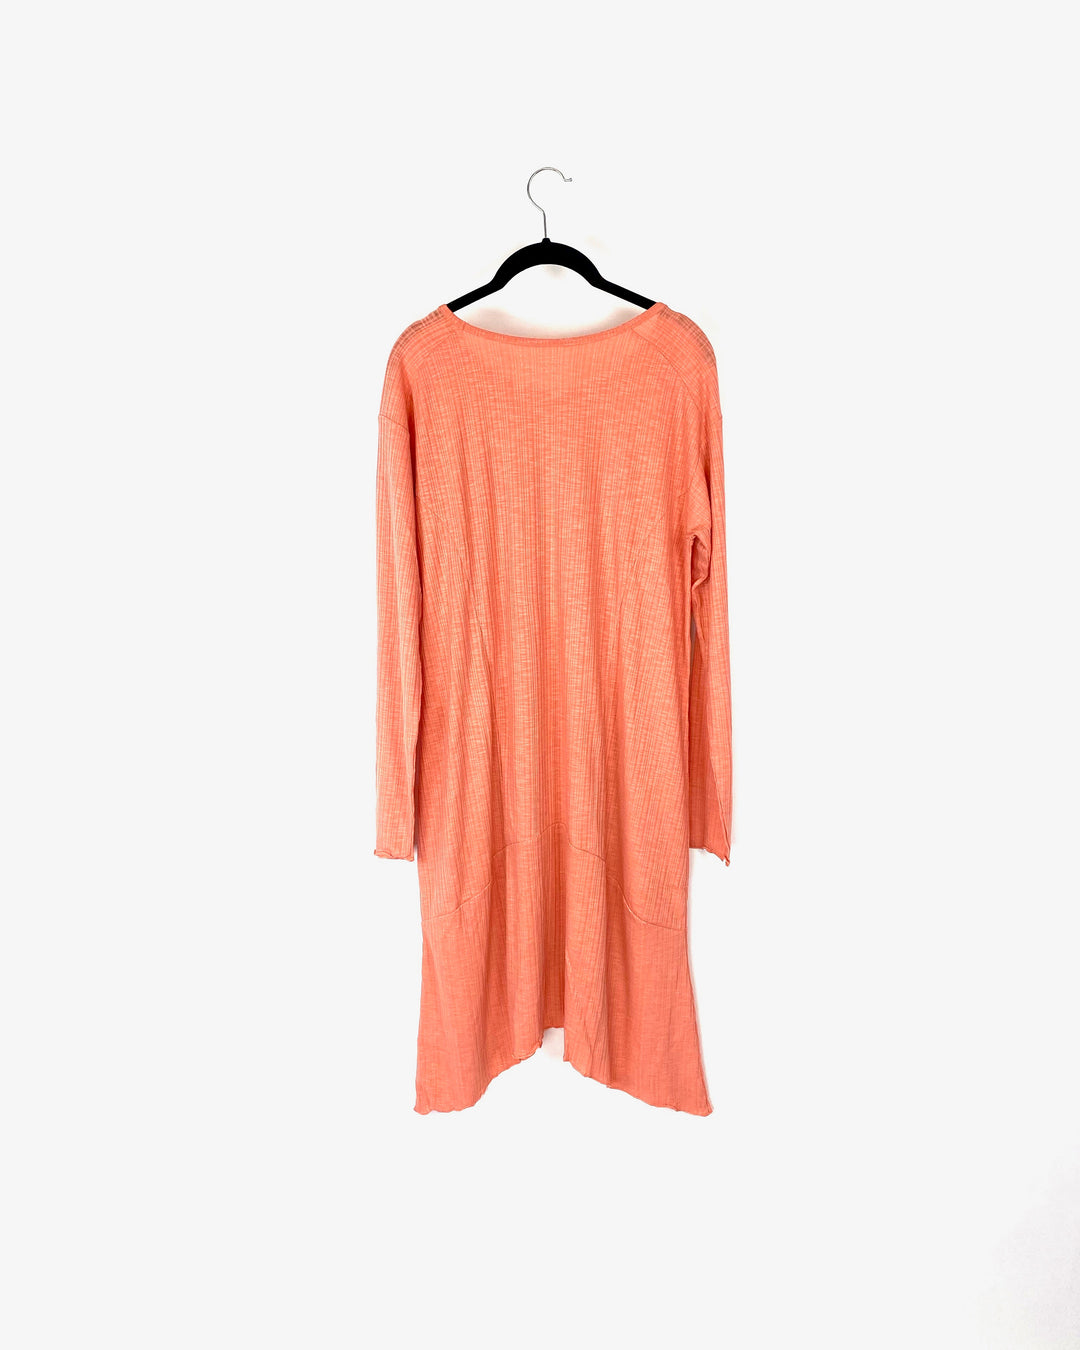 Peach Ribbed Dress - Small and Medium